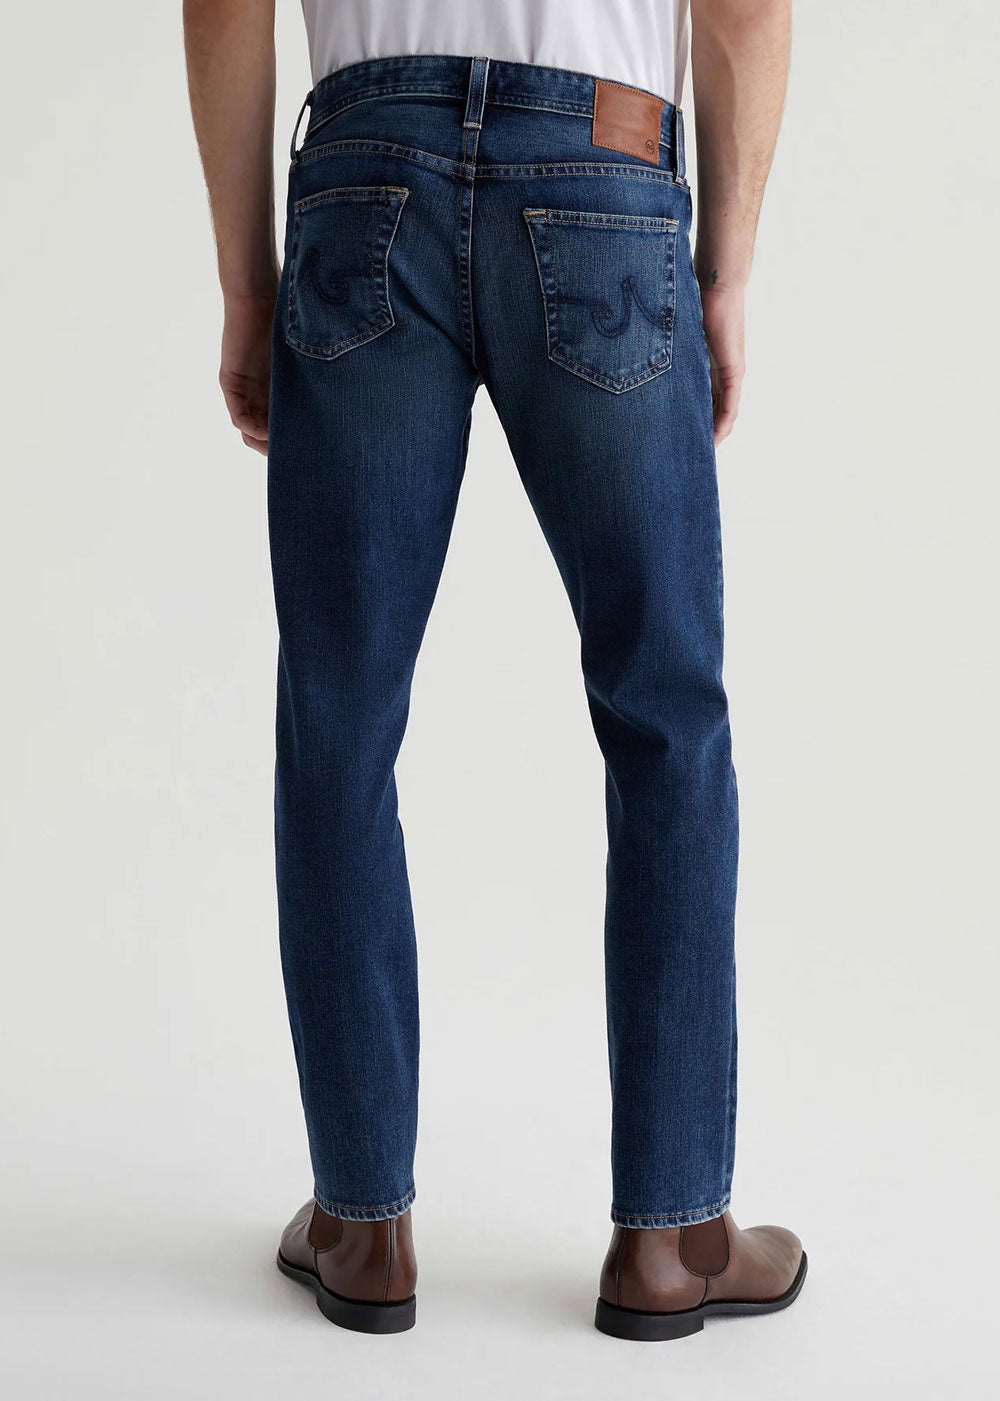 Tellis Modern Slim Jean - Stone Lagoon - AG Jeans - Danali - 1783FXDSTOL